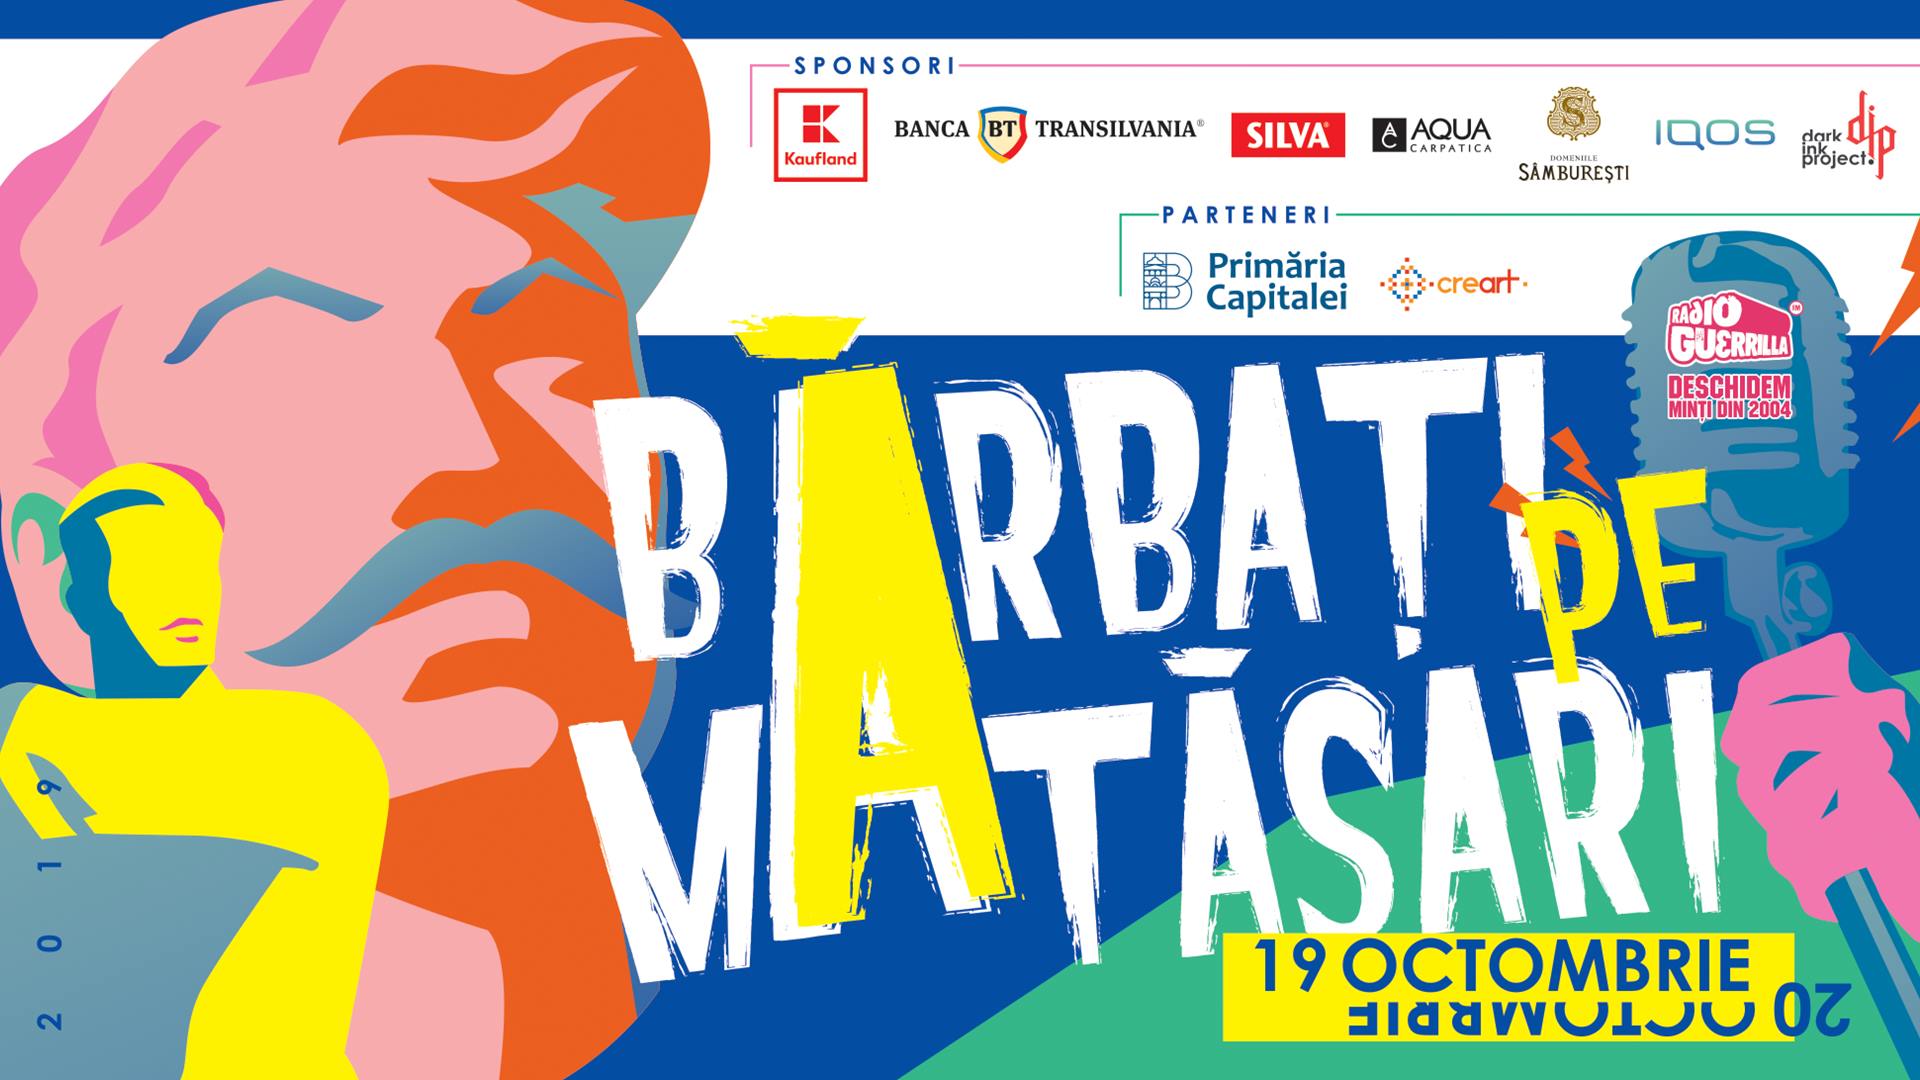 Incepe festivalul urban Barbati pe Matasari #2